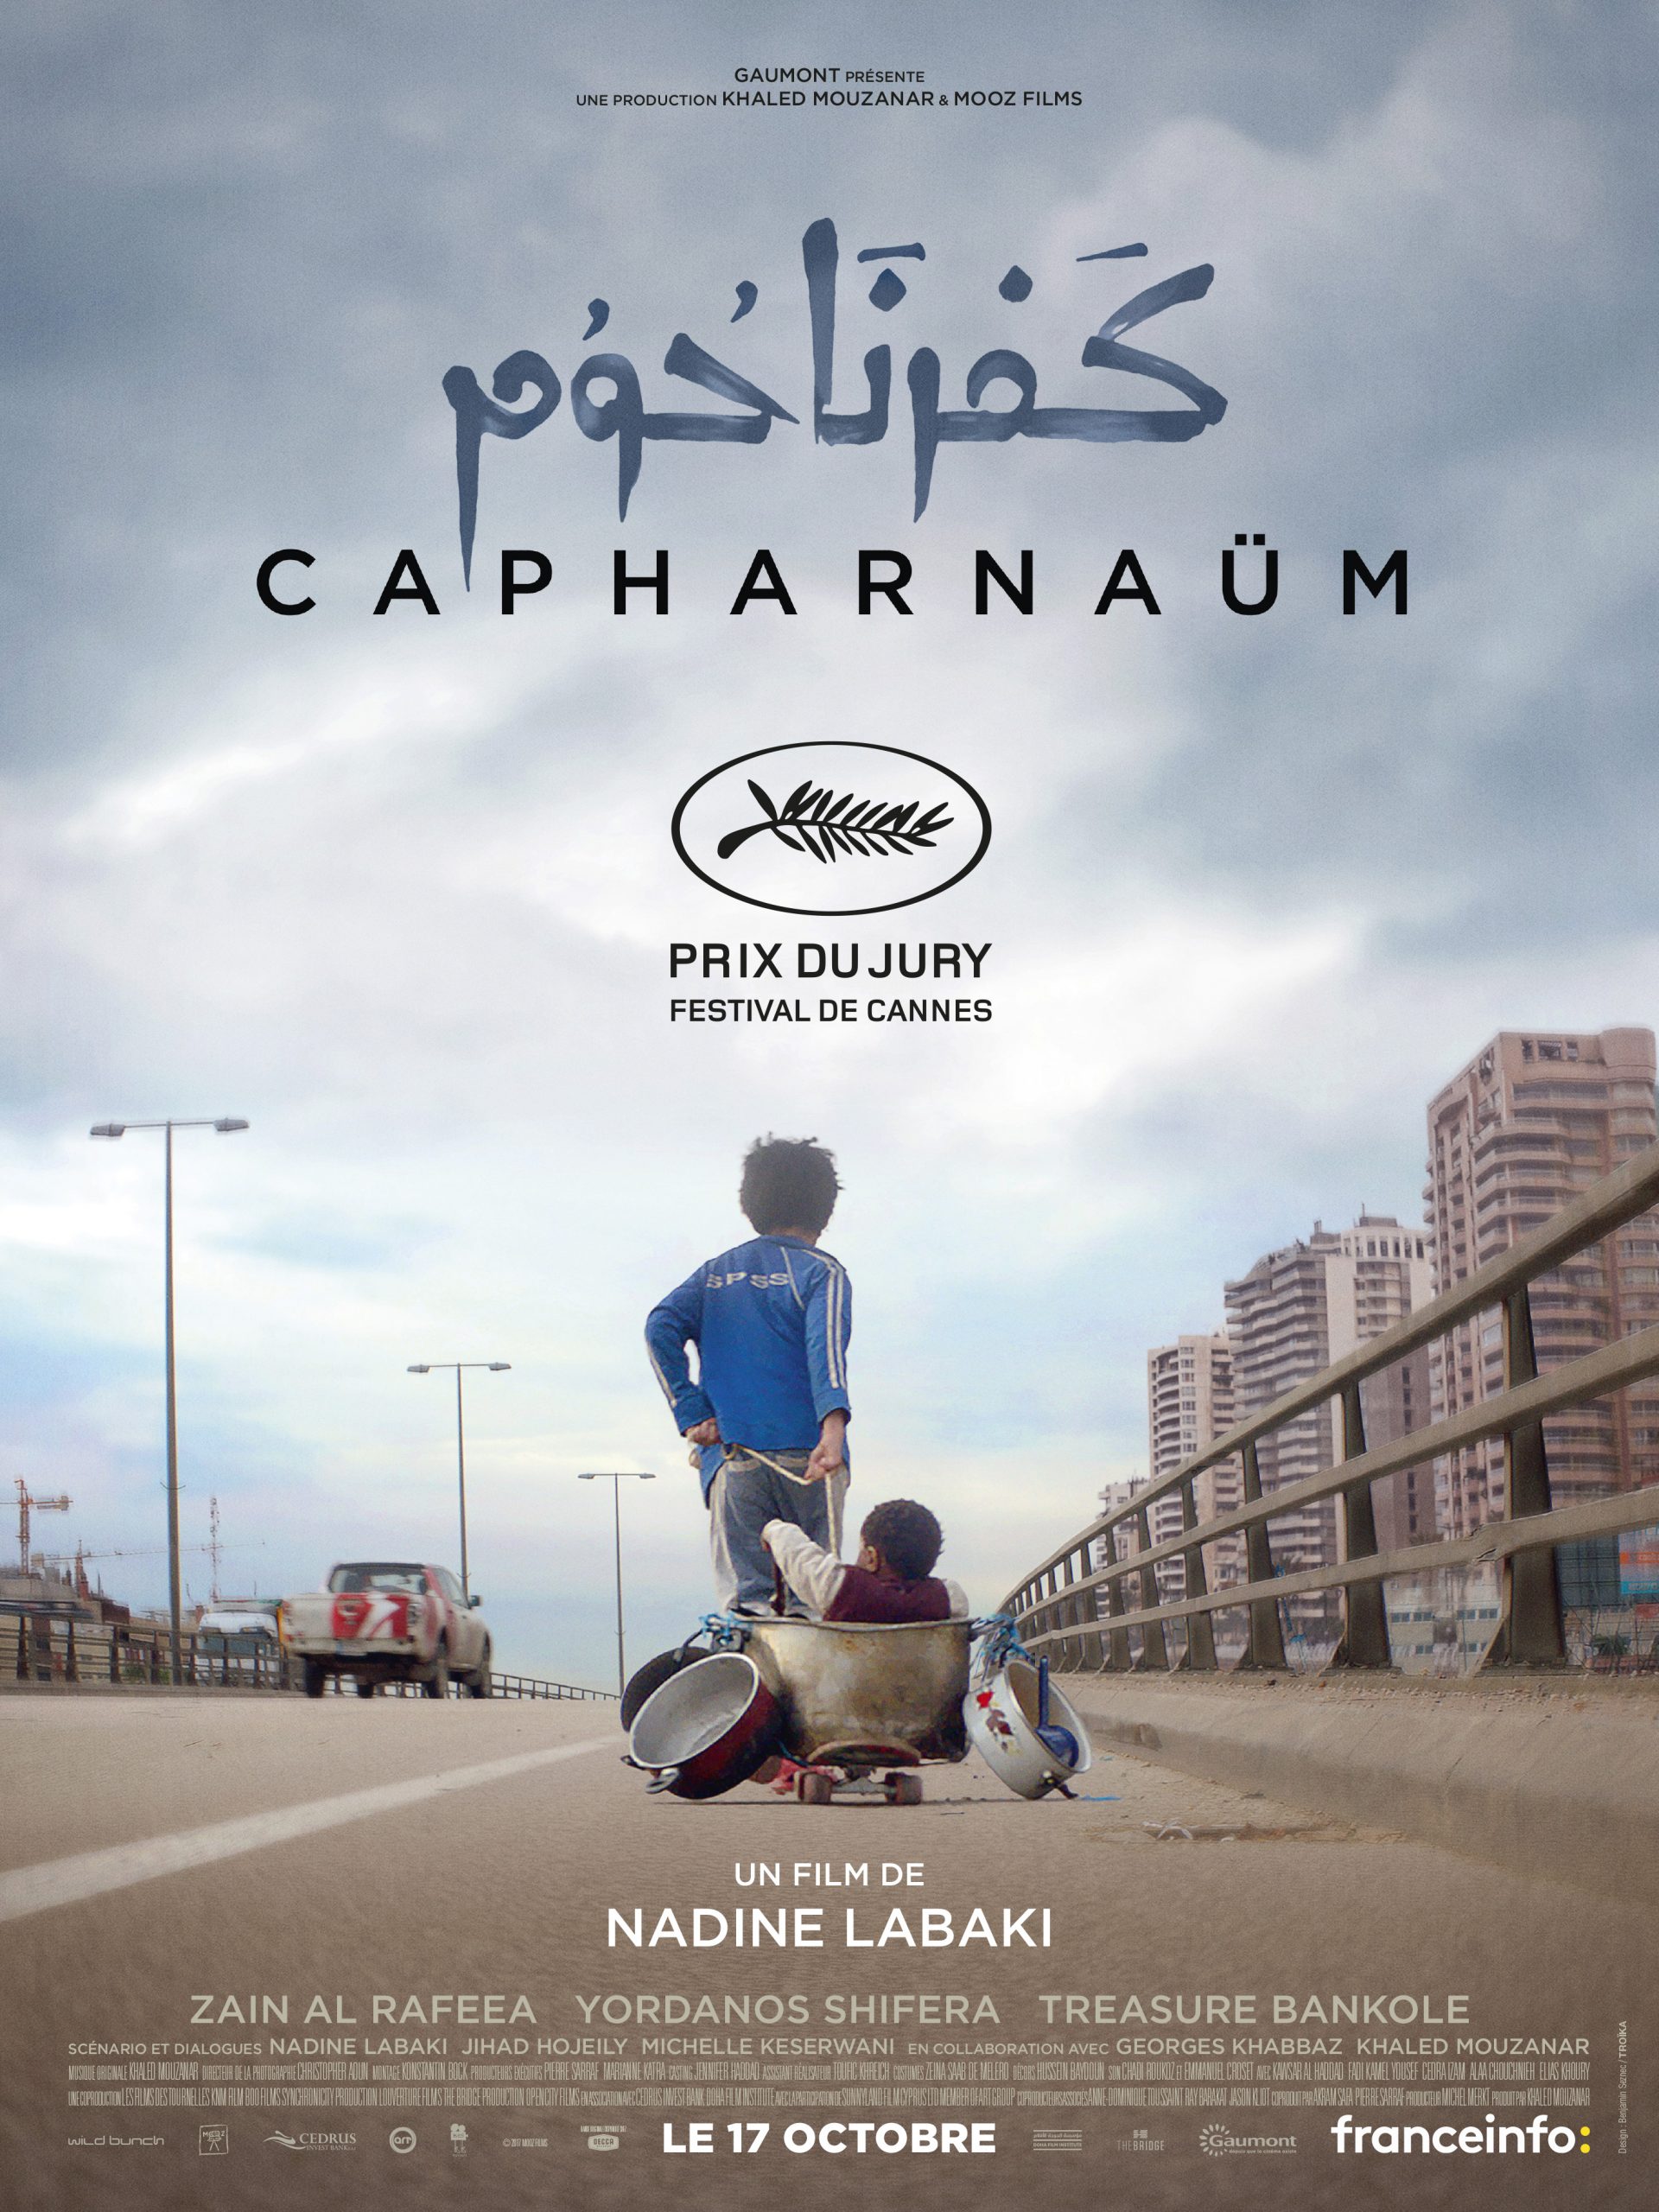 Capernaum (2018) ชีวิตที่เลือกไม่ได้